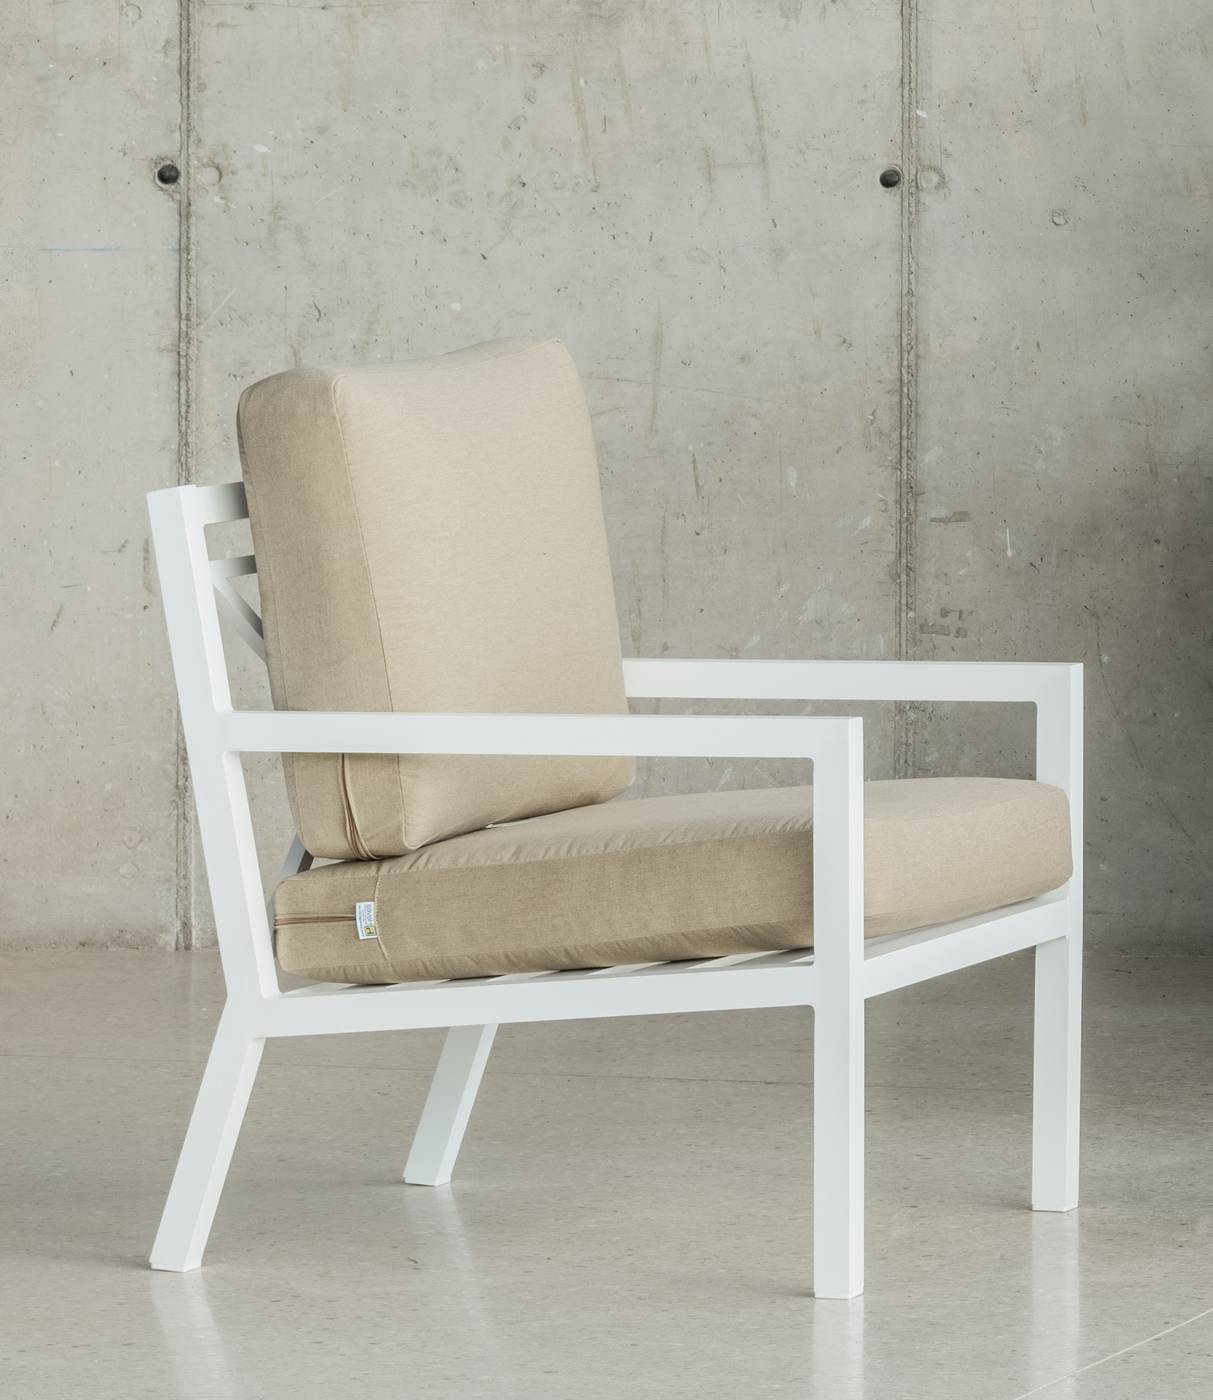 Cómodo sillón relax de aluminio de alta gama,  con cojines gran confort  fácilmente desenfundables. Estructura aluminio color blanco, antracita, champagne, plata o marrón.